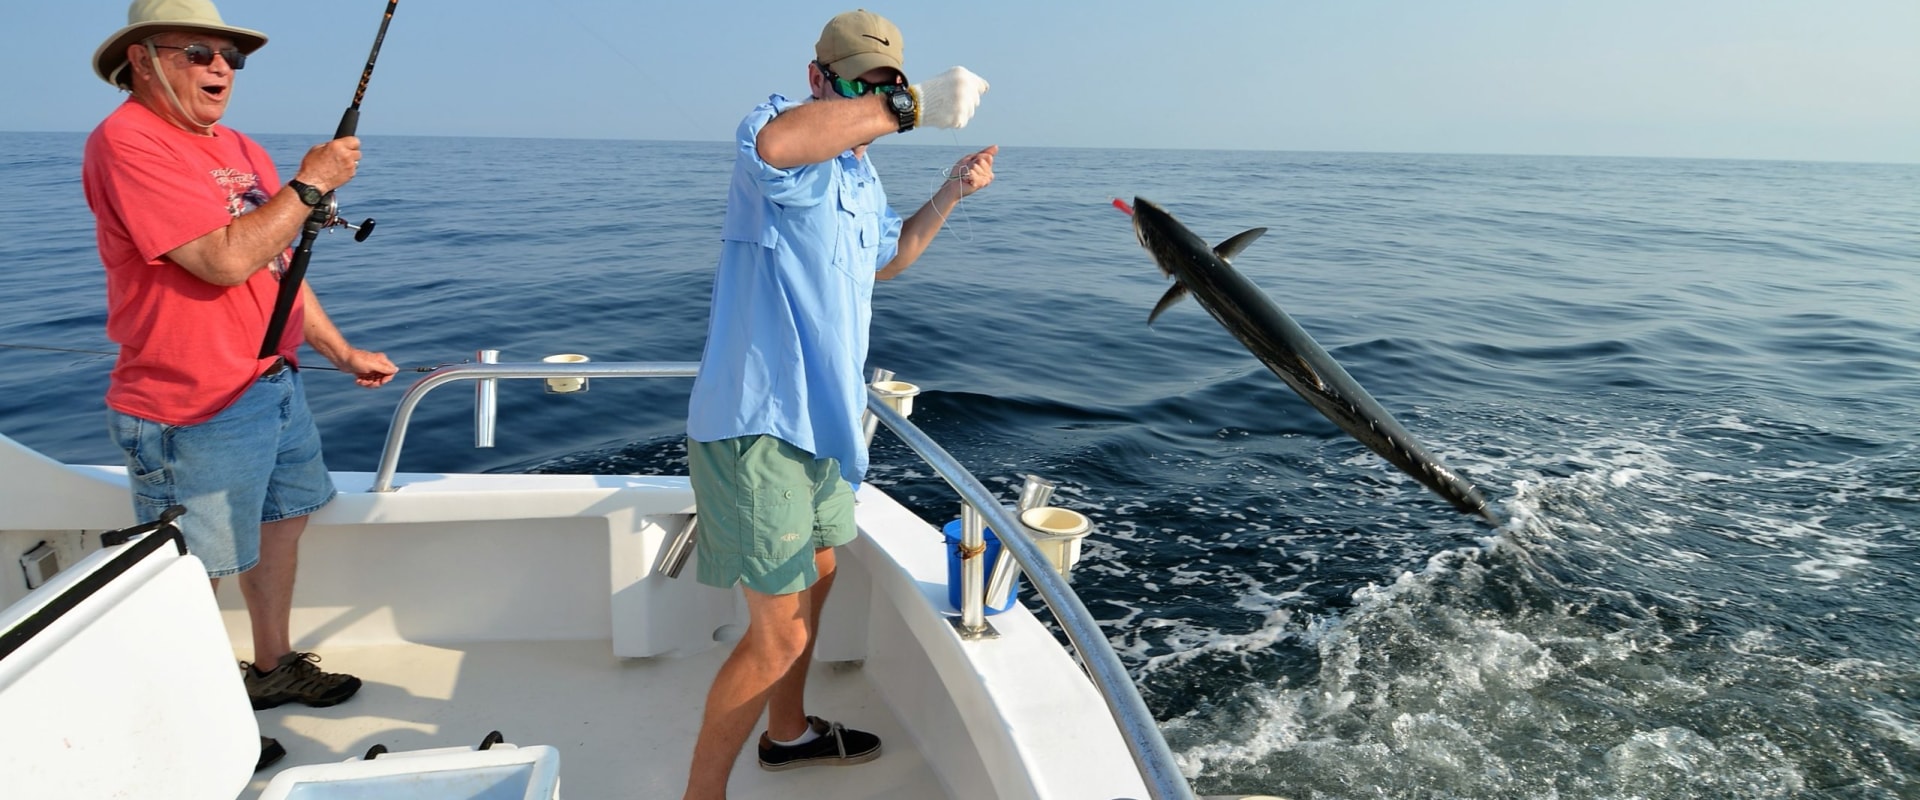 How long do fishing charters last?